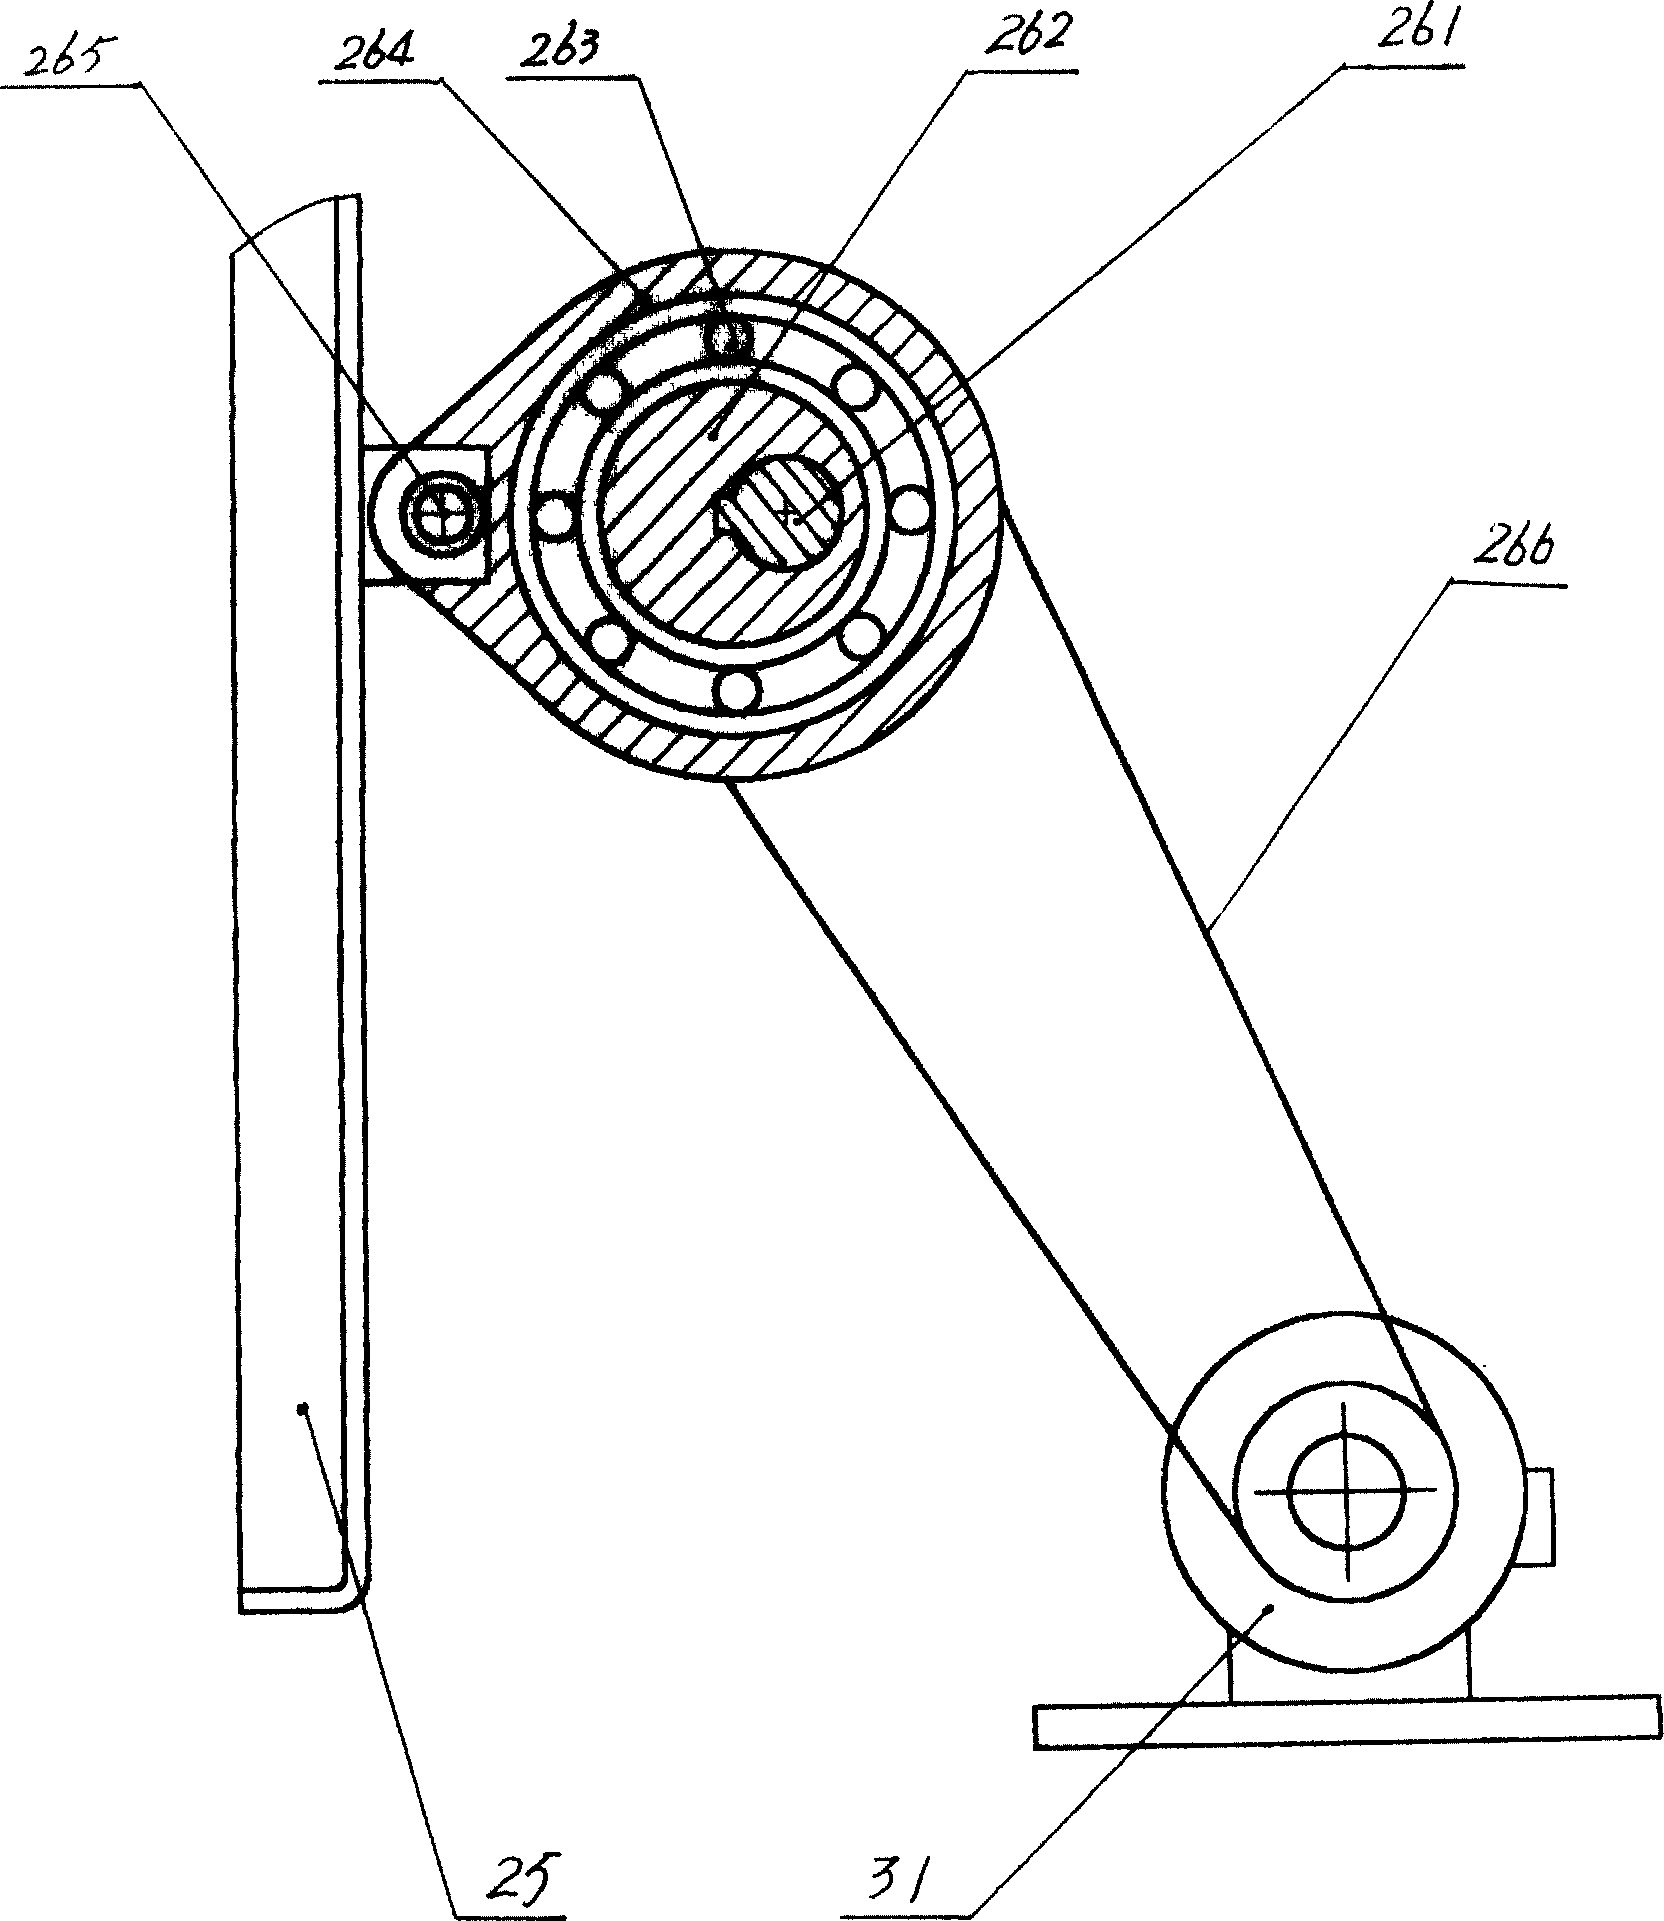 Blowing-carding-drawing vibratory cotton basket